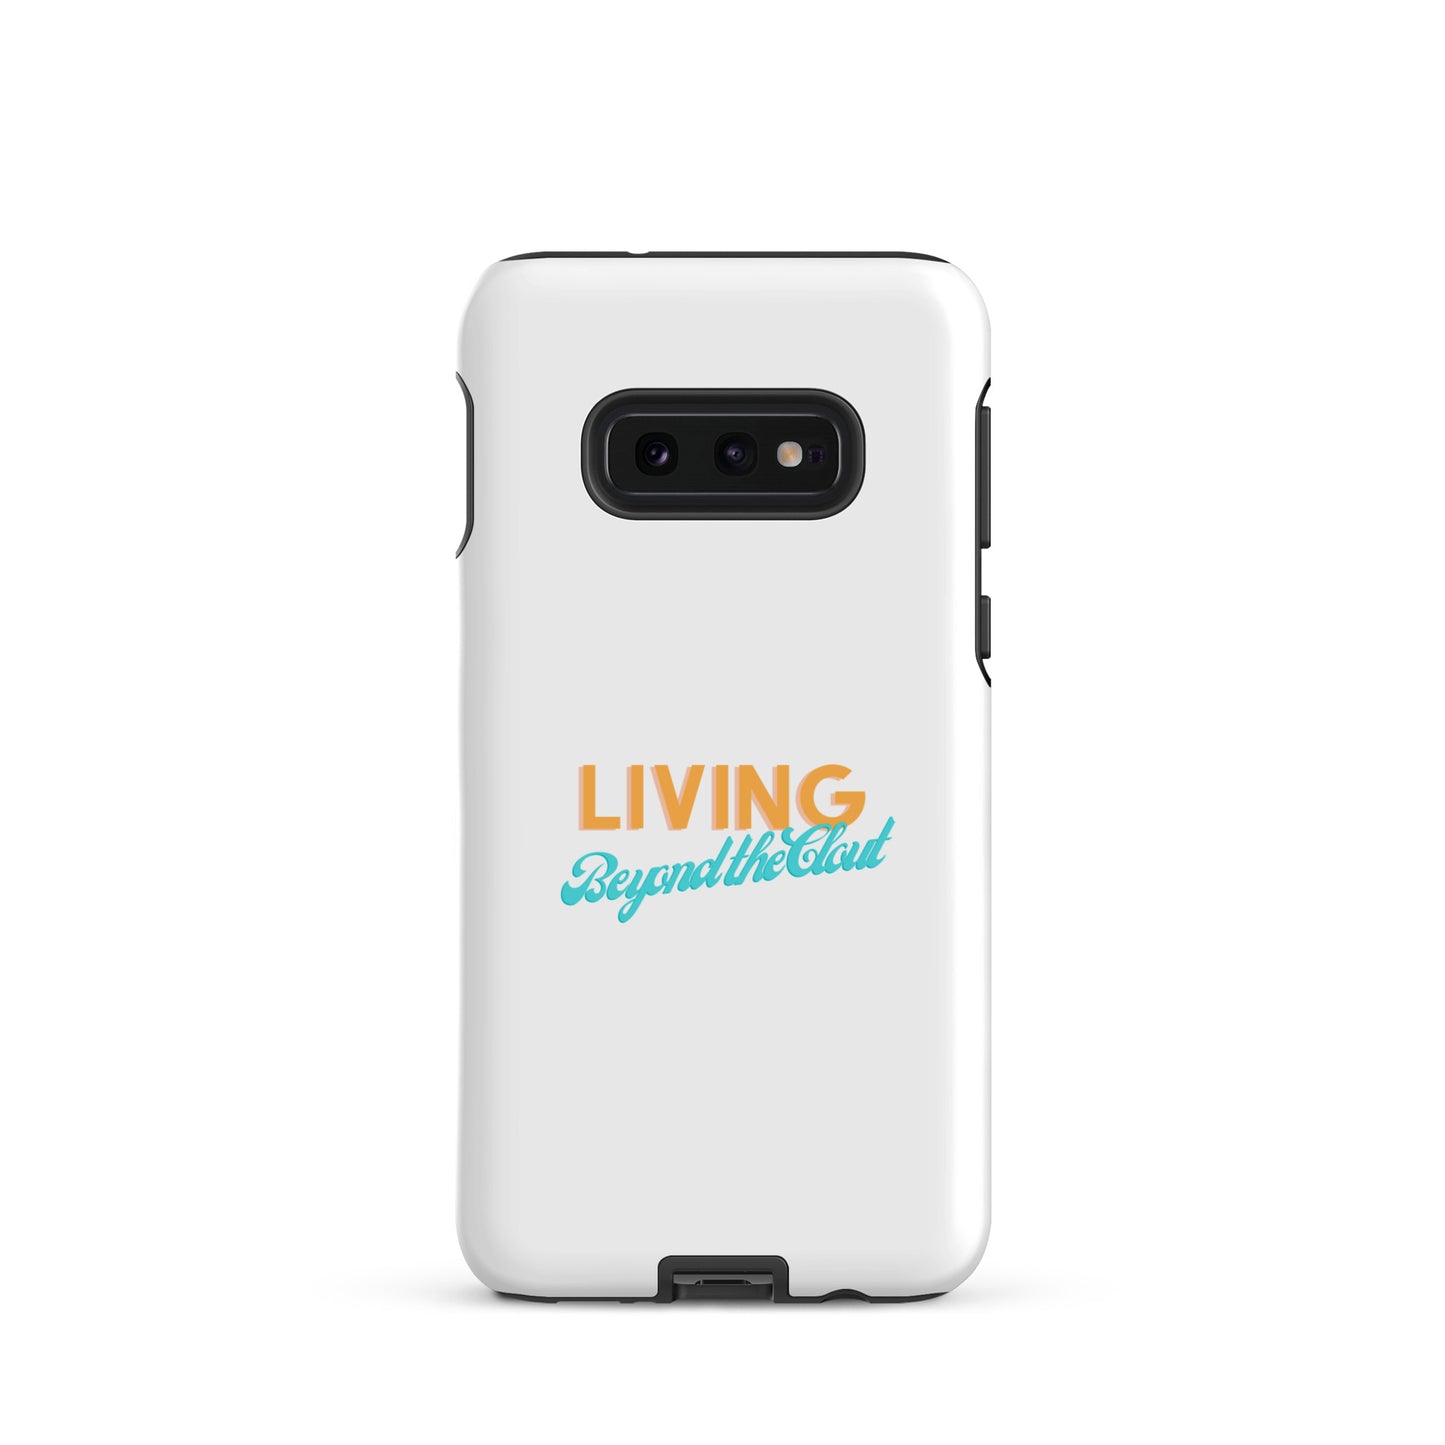 Living case for Samsung®